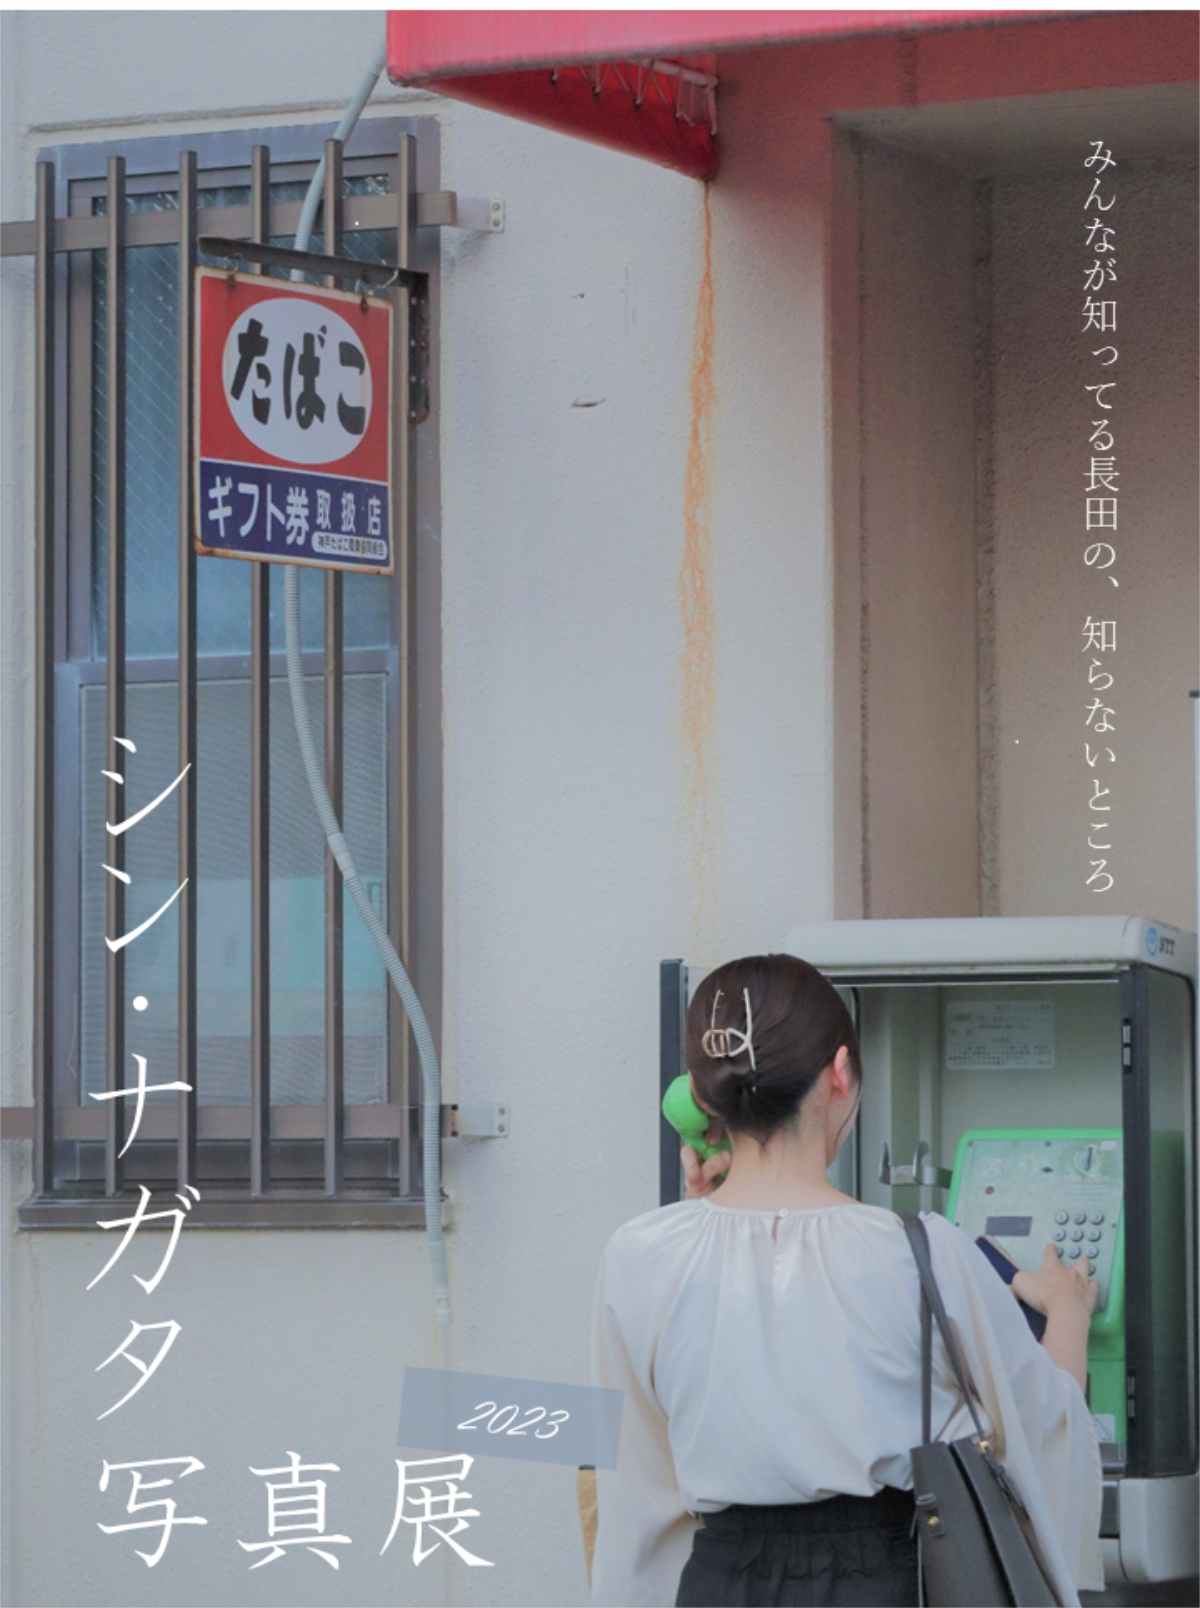 JR新長田駅近くの大橋地下道で「シン・ナガタ写真展2023」開催　神戸市 [画像]